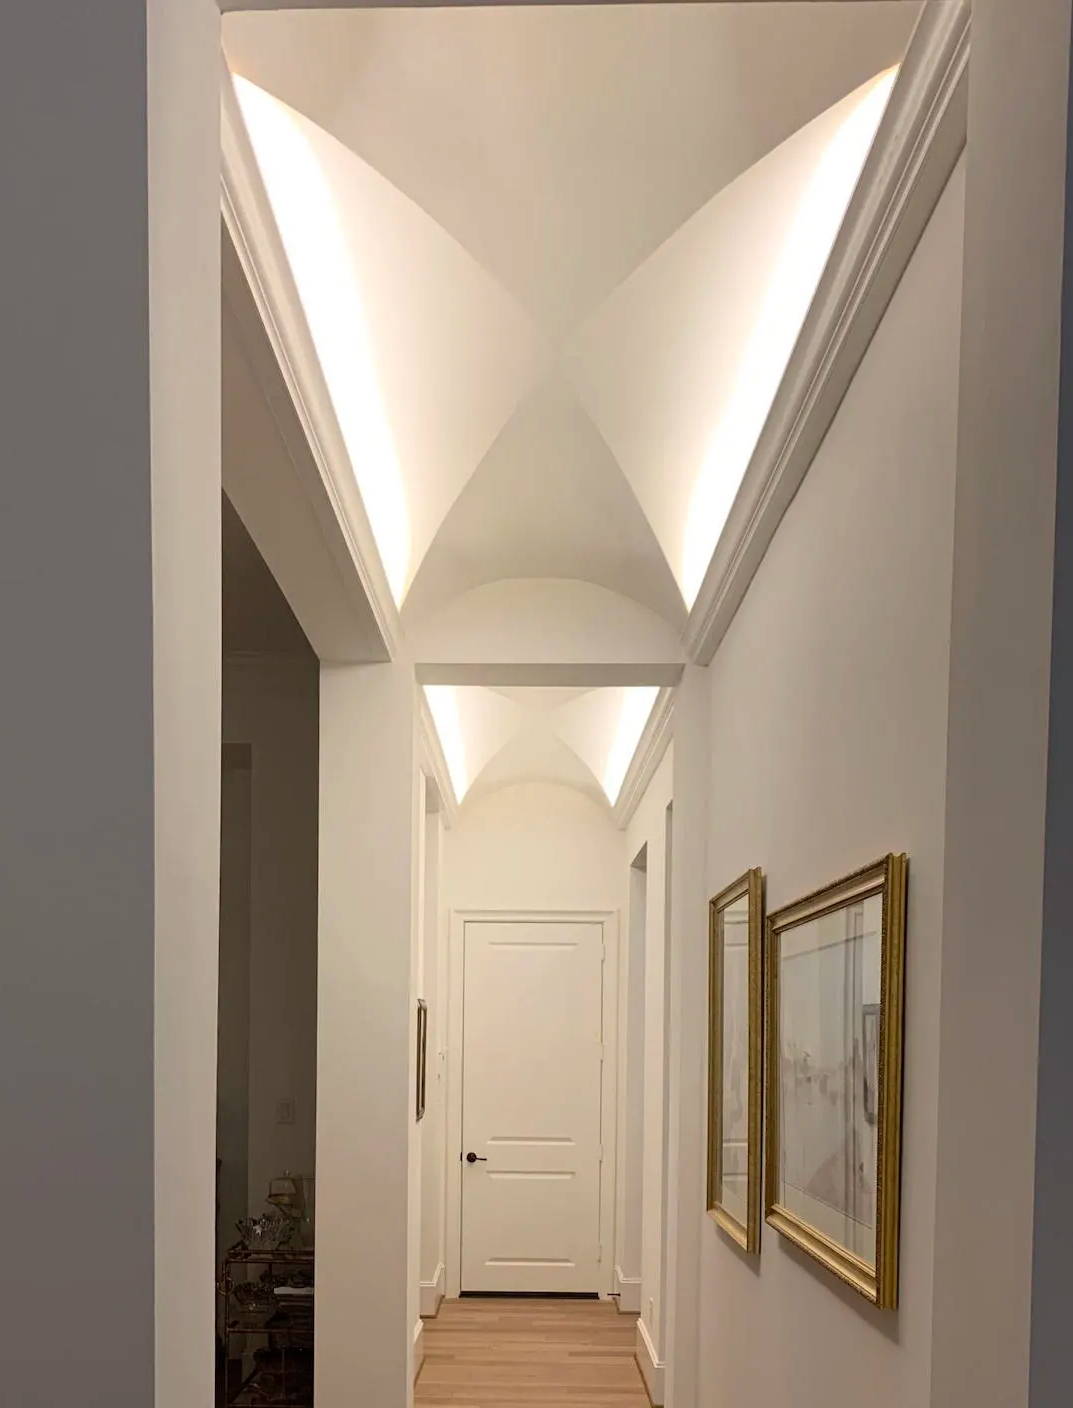 Hallway cove lighting with LED strip lights